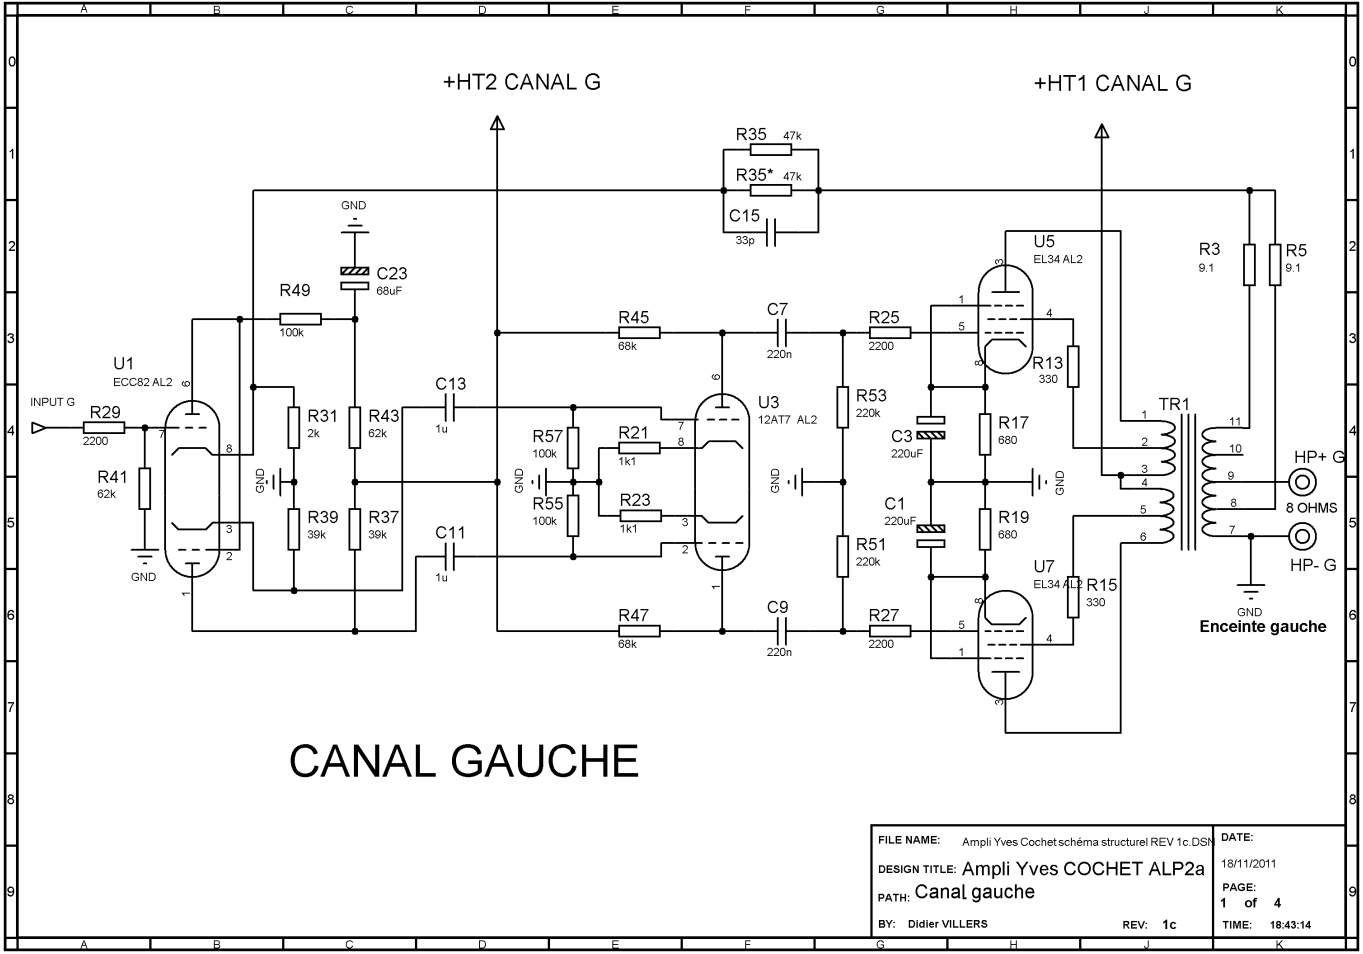 Ampli Yves Cochet schéma structurel canal gauche REV 1c.jpg